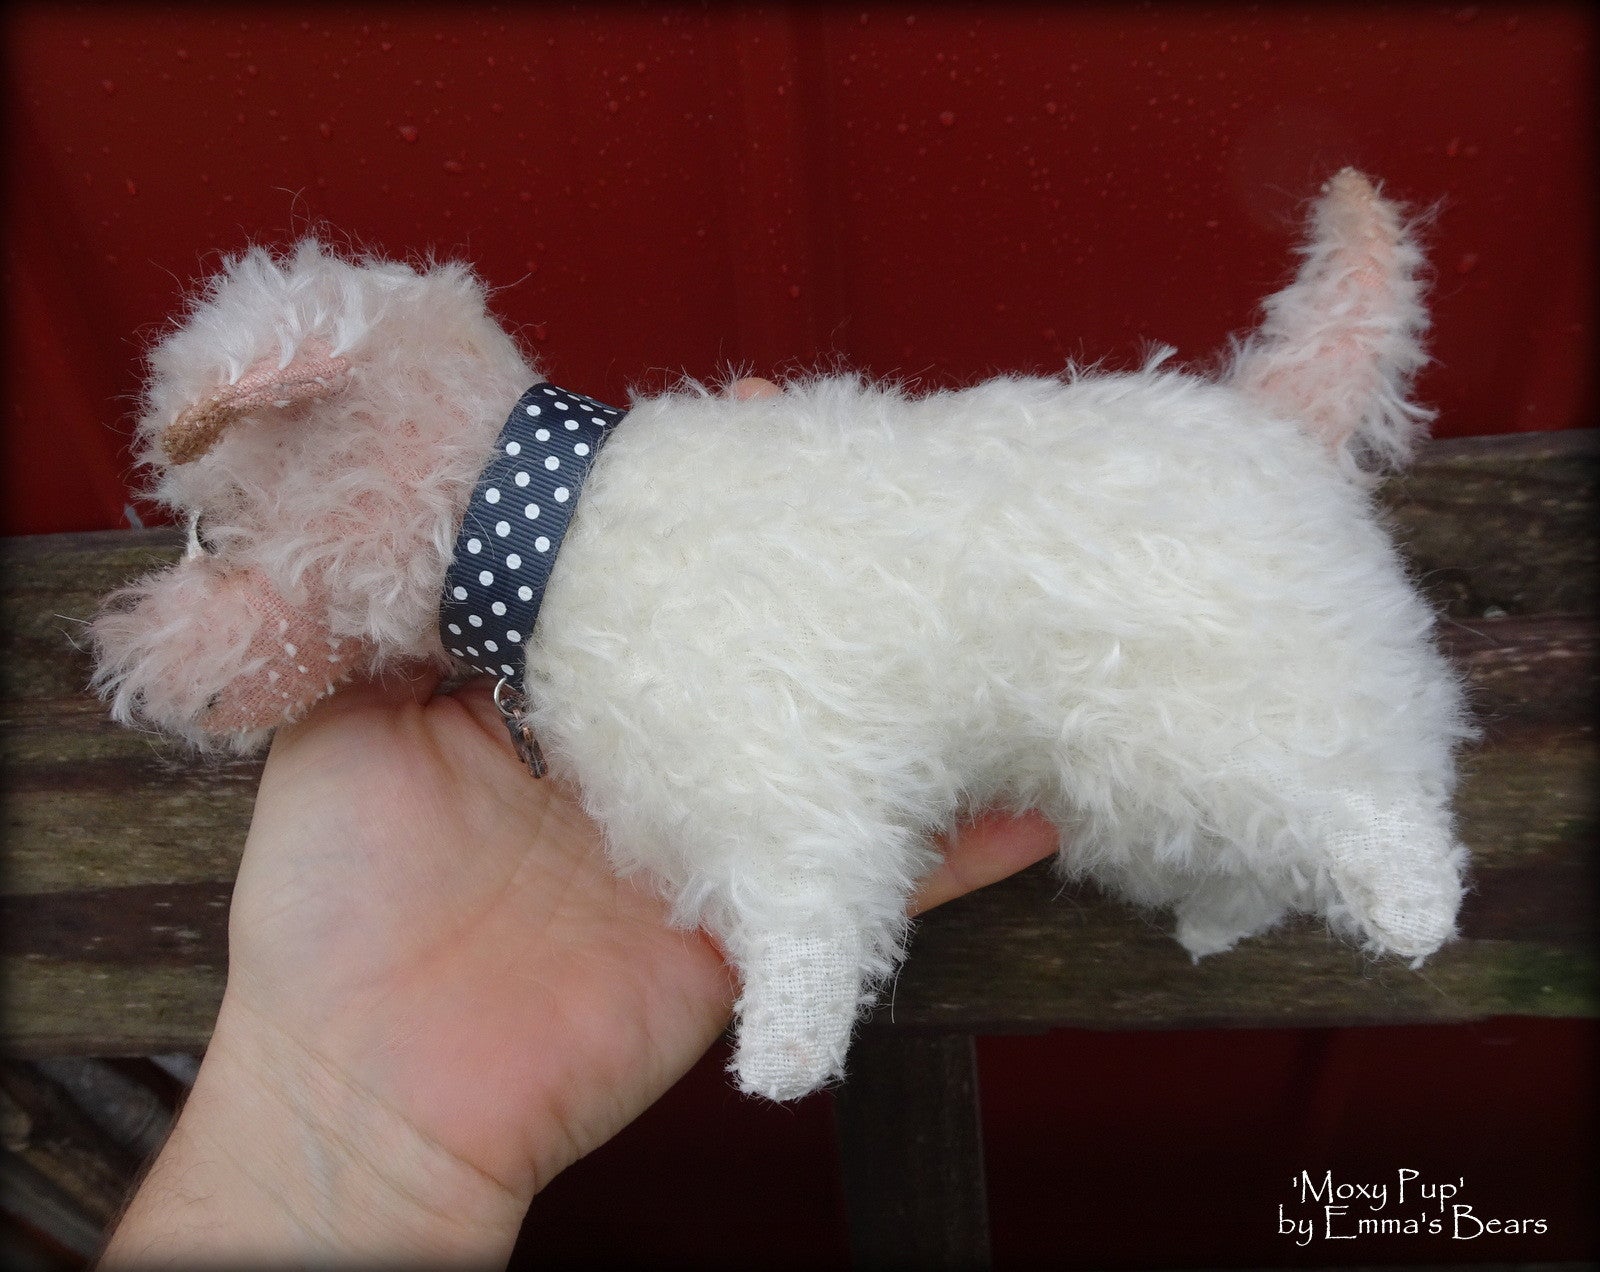 Moxy Pup - 7IN mohair puppy soft sculpture by Emmas Bears - OOAK